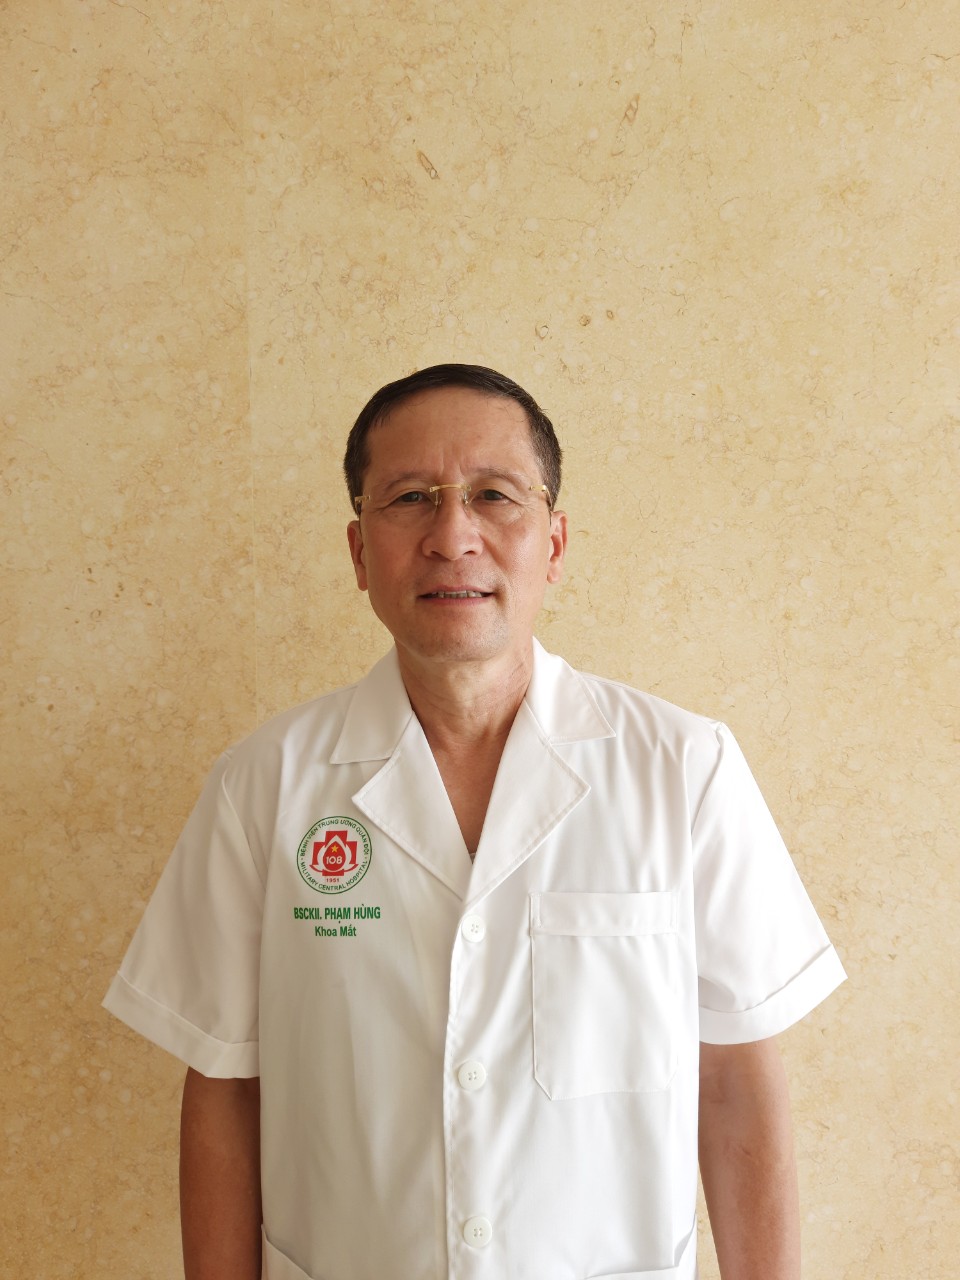 Dr. Phạm Hùng, Second-degree specialist